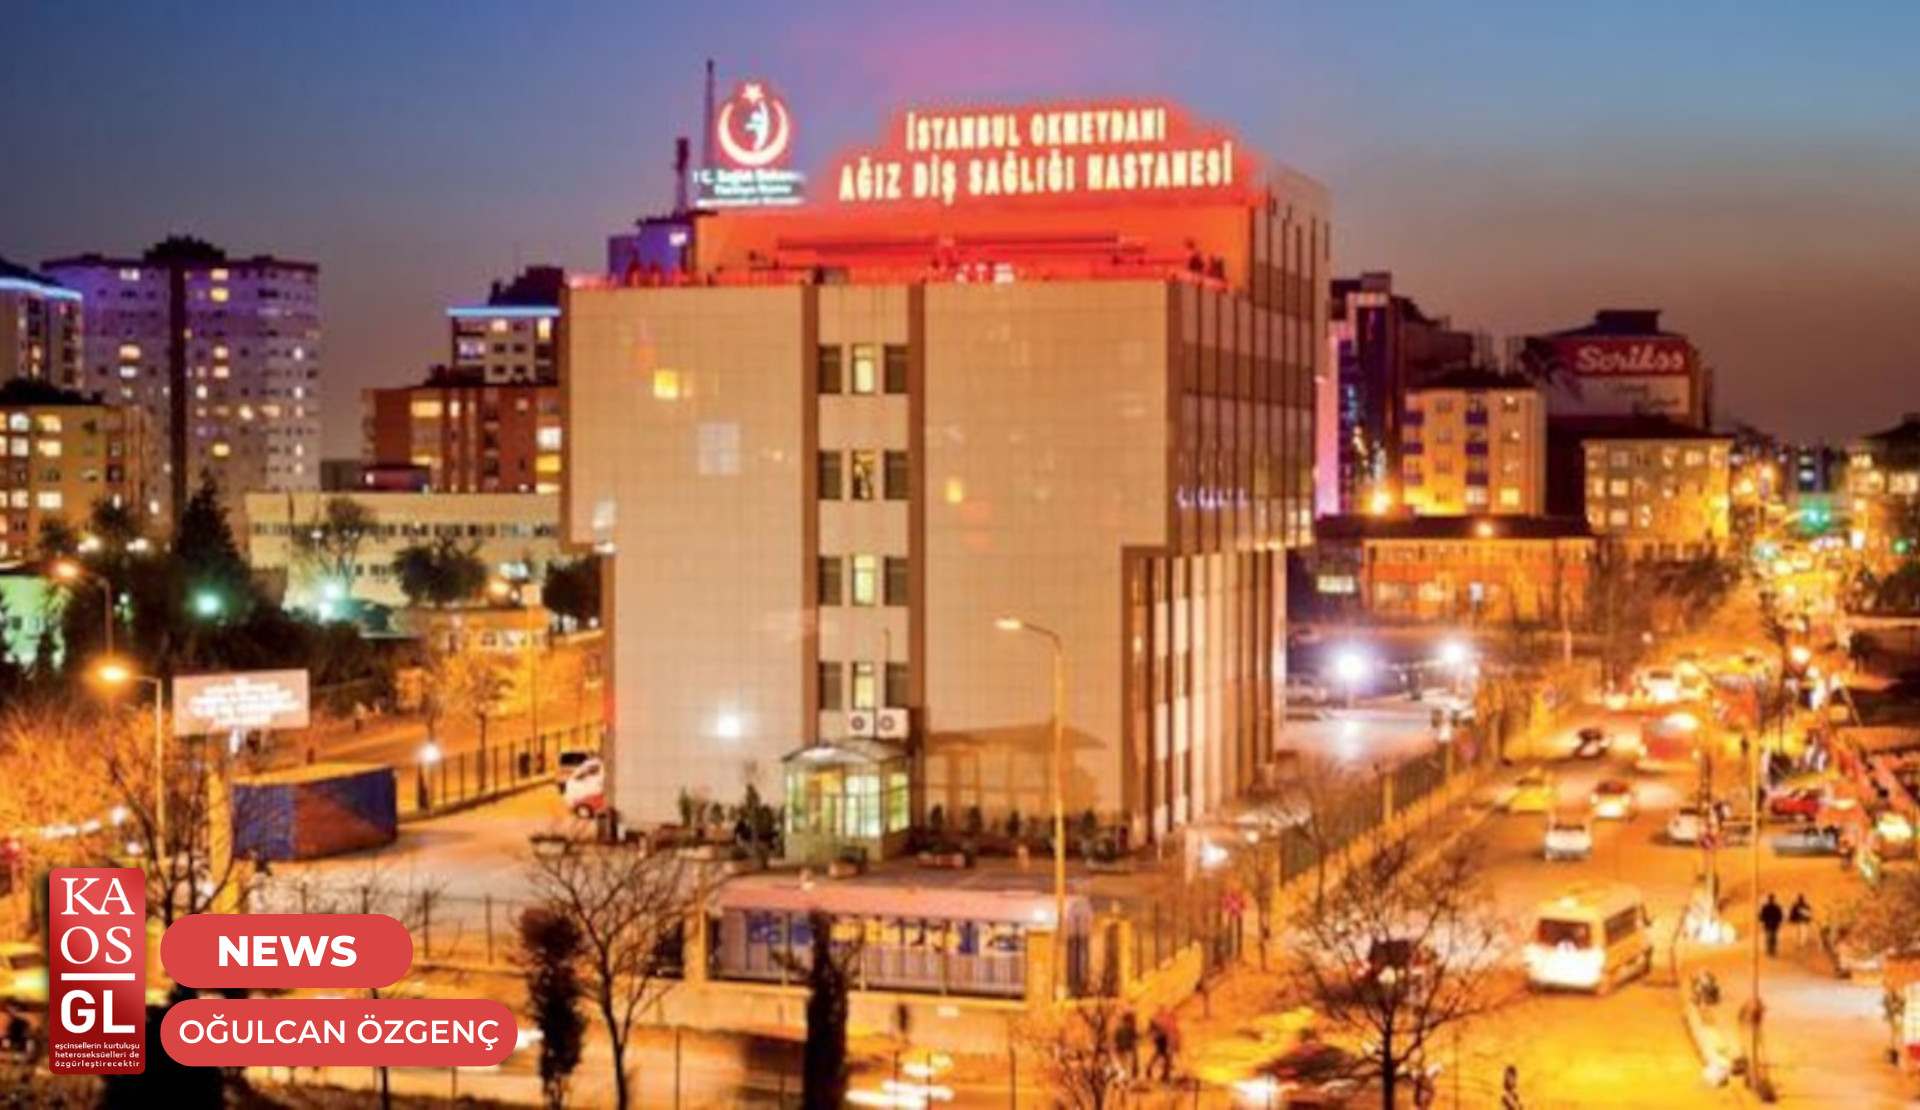 Hate speech at the Okmeydanı Oral and Dental Health Hospital: “You are promoting LGBT propaganda.” | Kaos GL - News Portal for LGBTI+ News